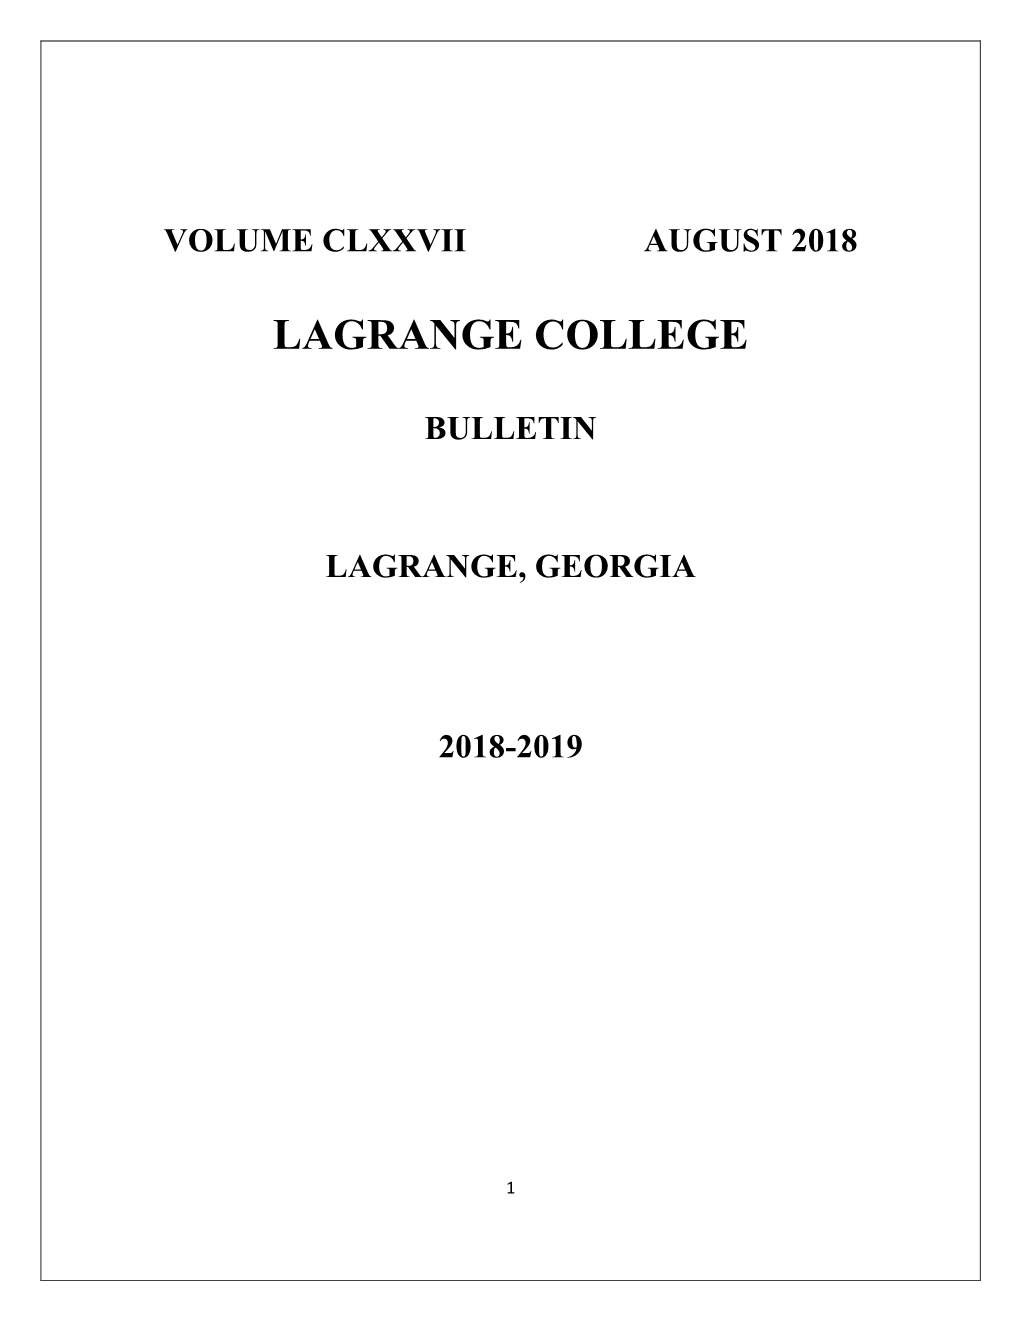 2018-2019 Lagrange College Bulletin